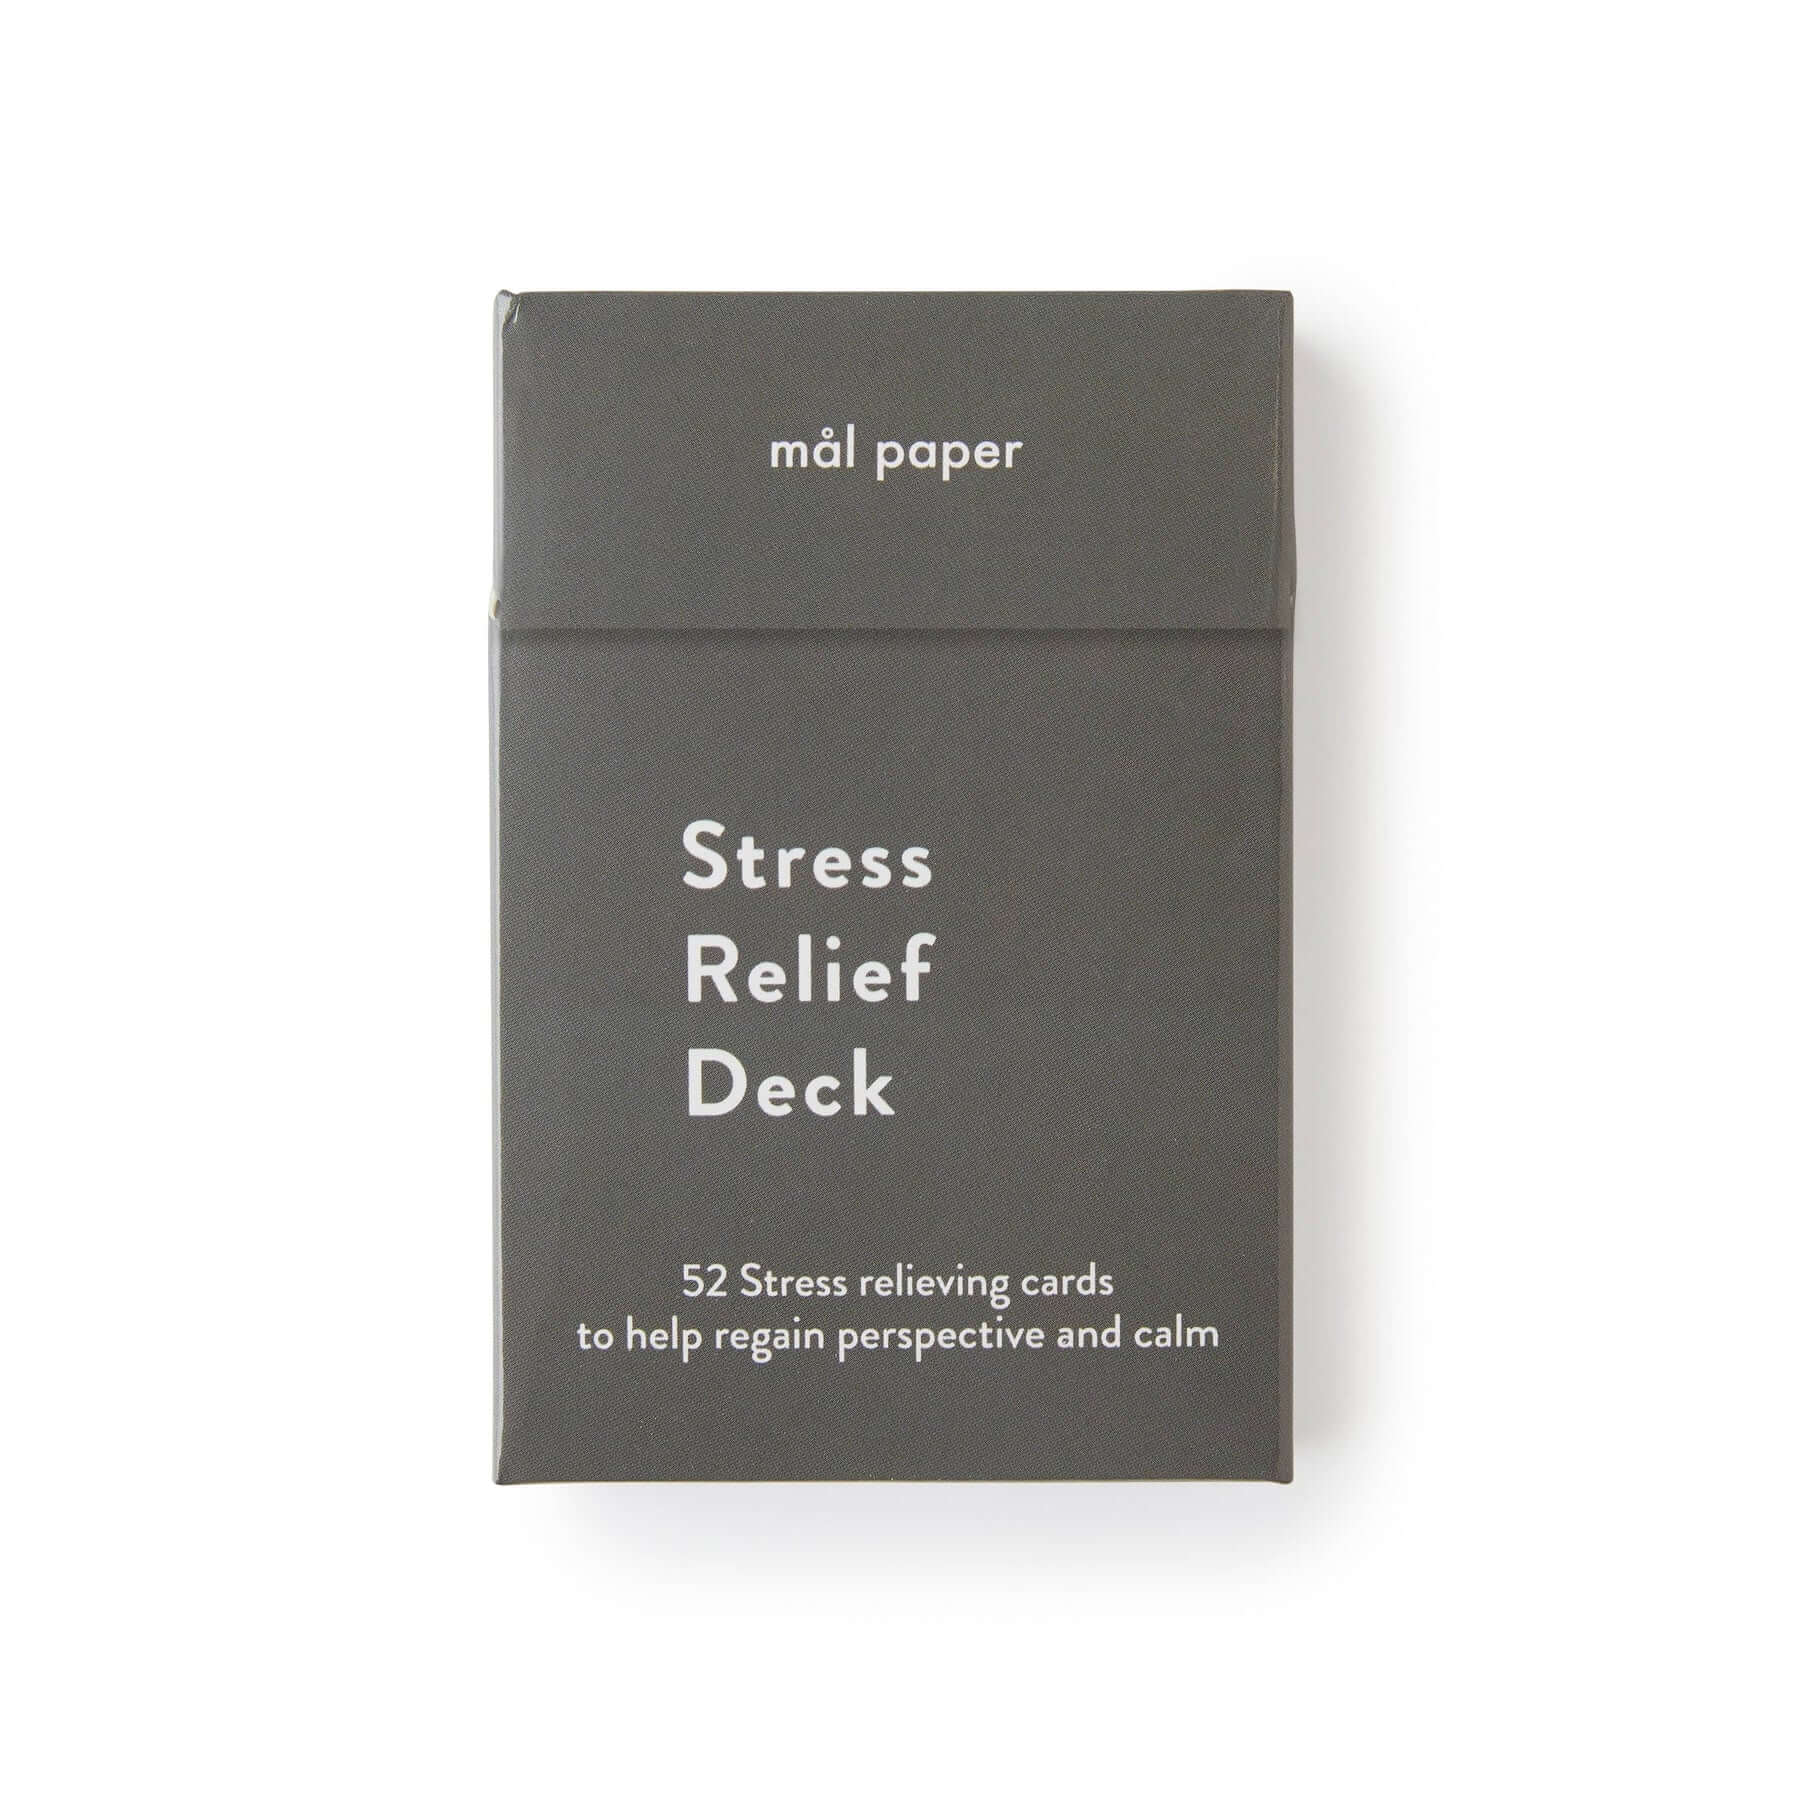 Mål paper Stress Relief Card Deck